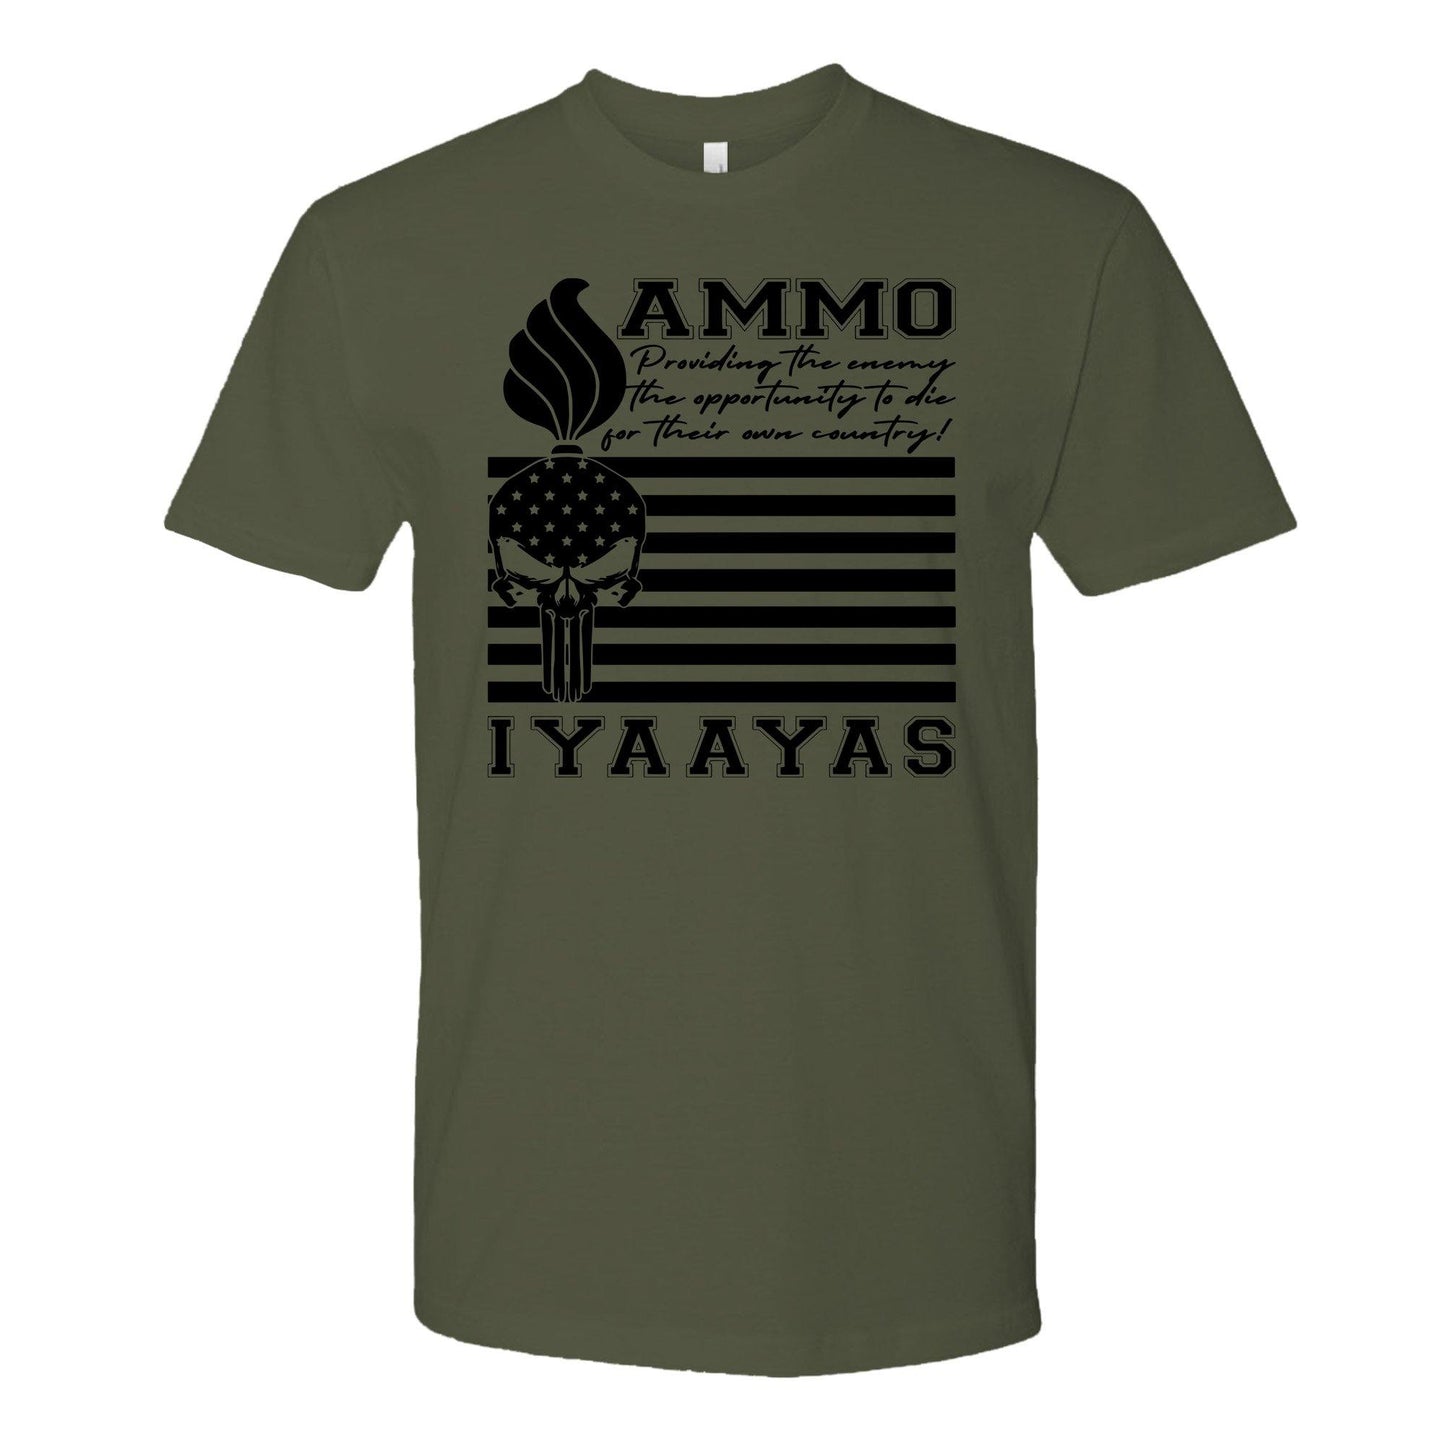 USAF AMMO Punisher Flag Motto IYAAYAS Munitions Heritage Unisex Gift T-Shirt - AMMO Pisspot IYAAYAS Gear